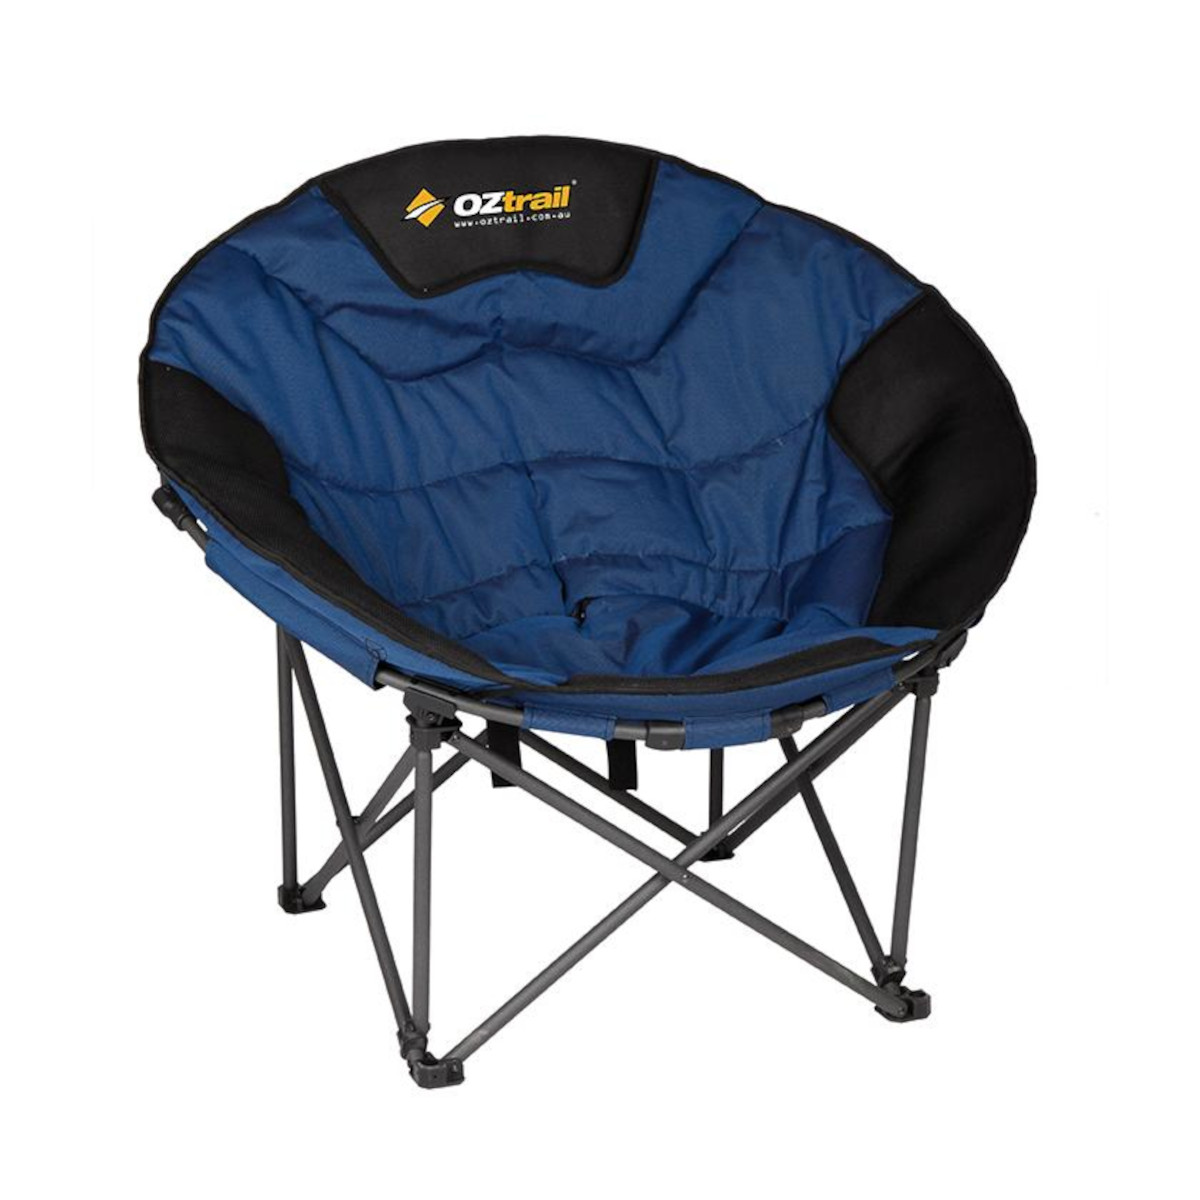 Oztrail Moon Chair Jumbo-foldable camping chair